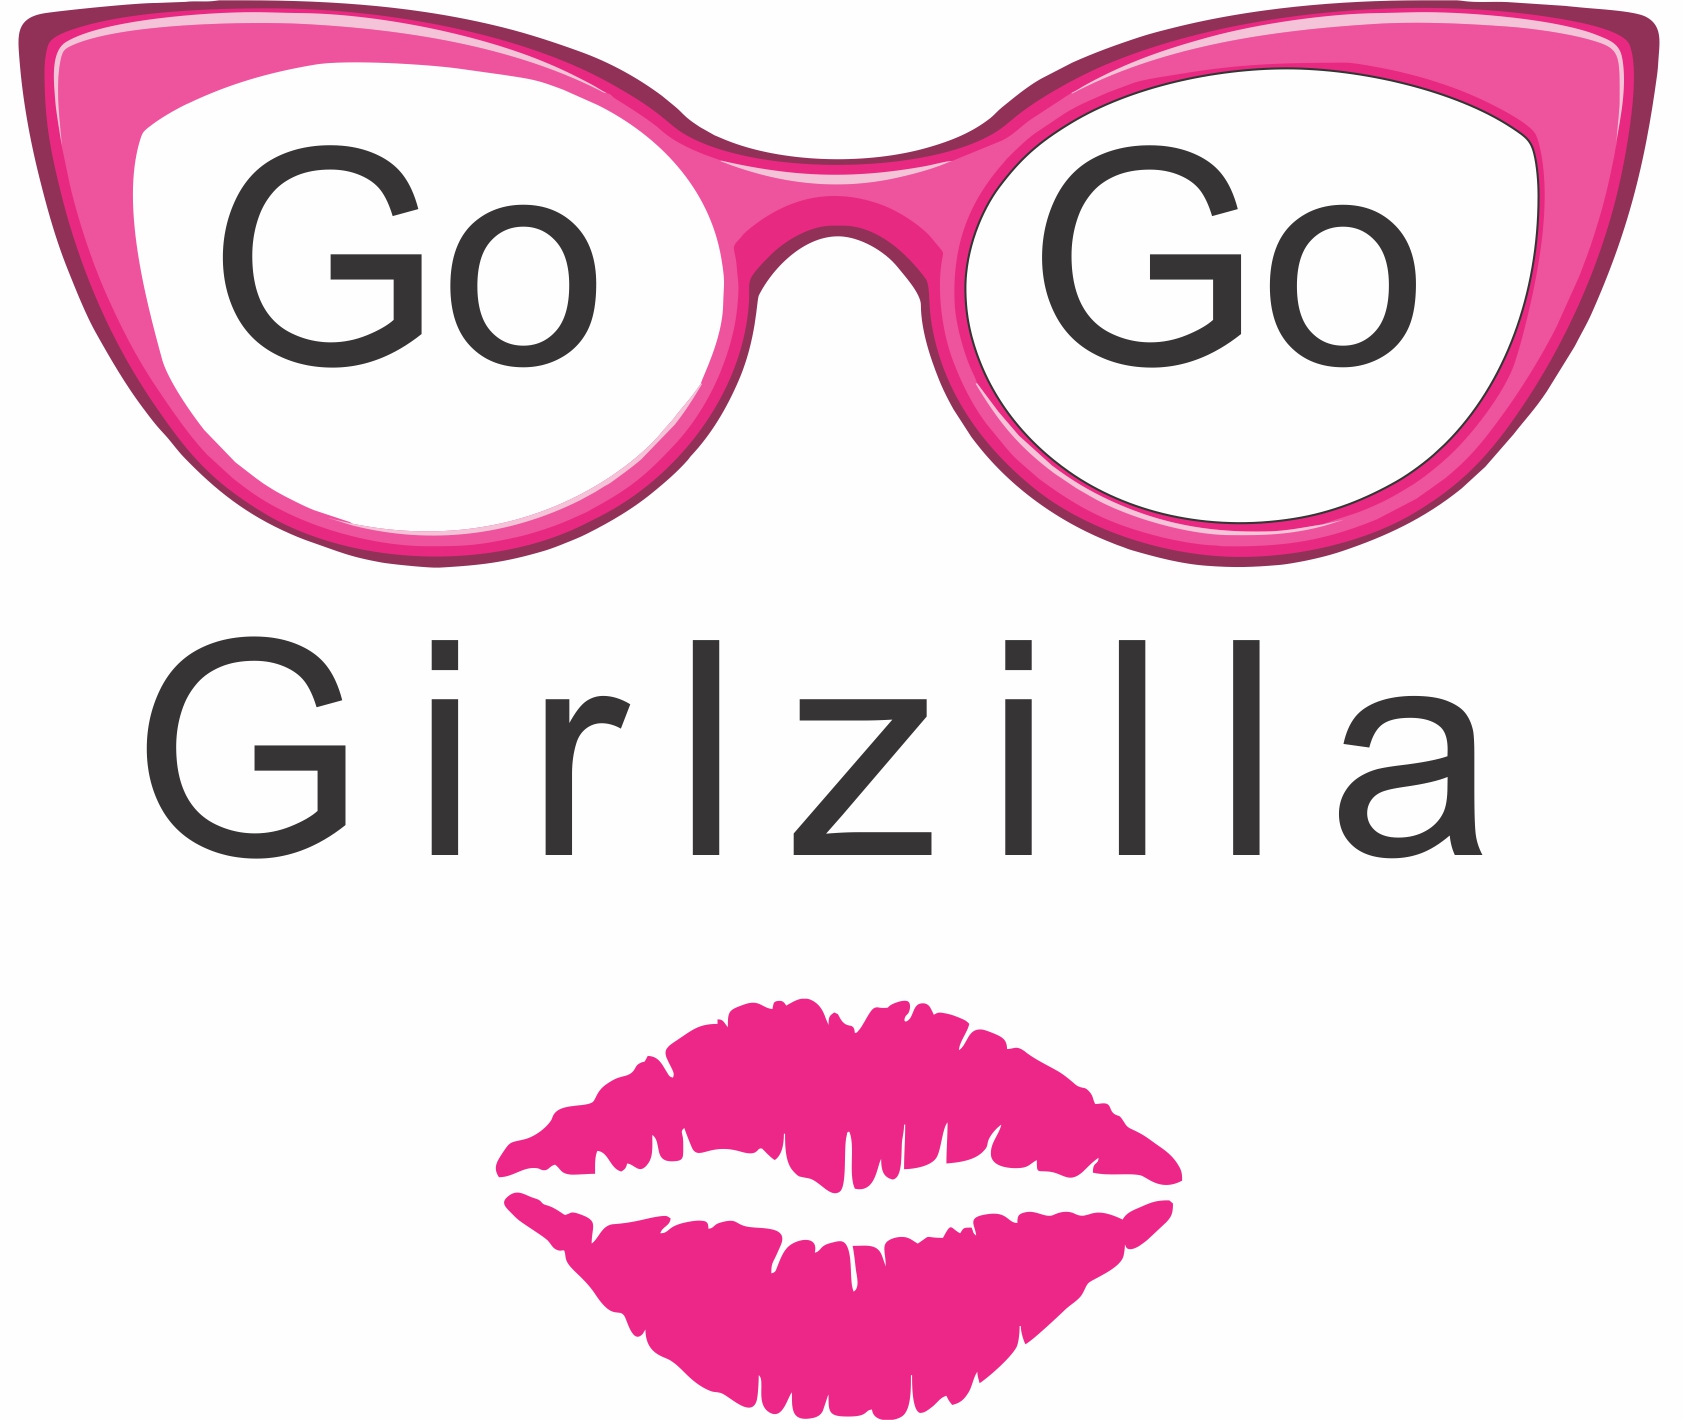 Go Go Girlzilla